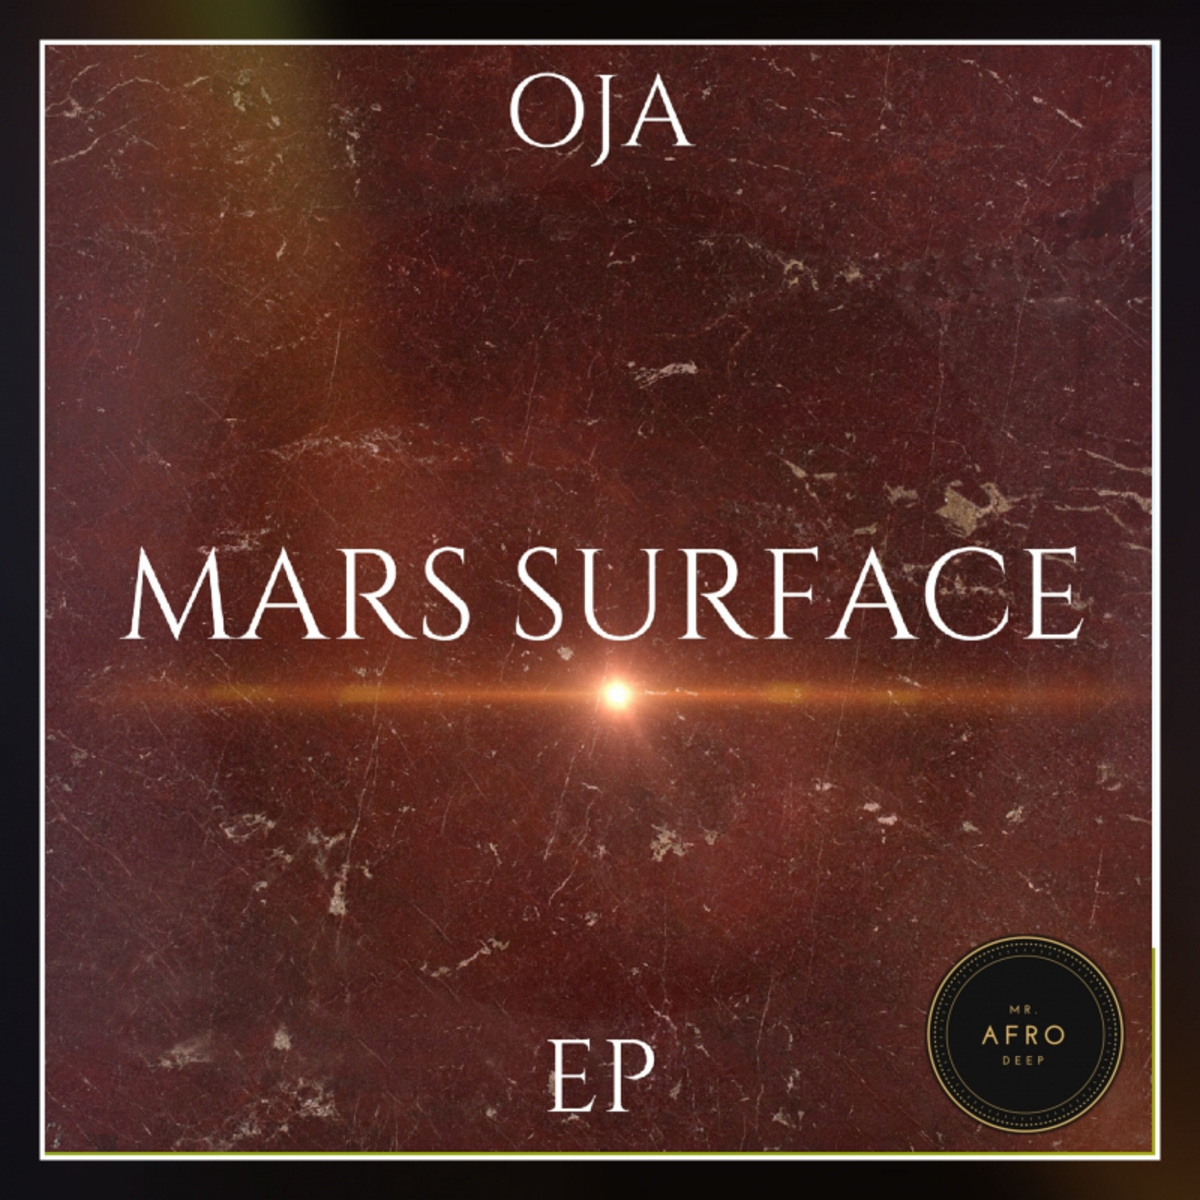 Oja - Mars Surface / Mr. Afro Deep